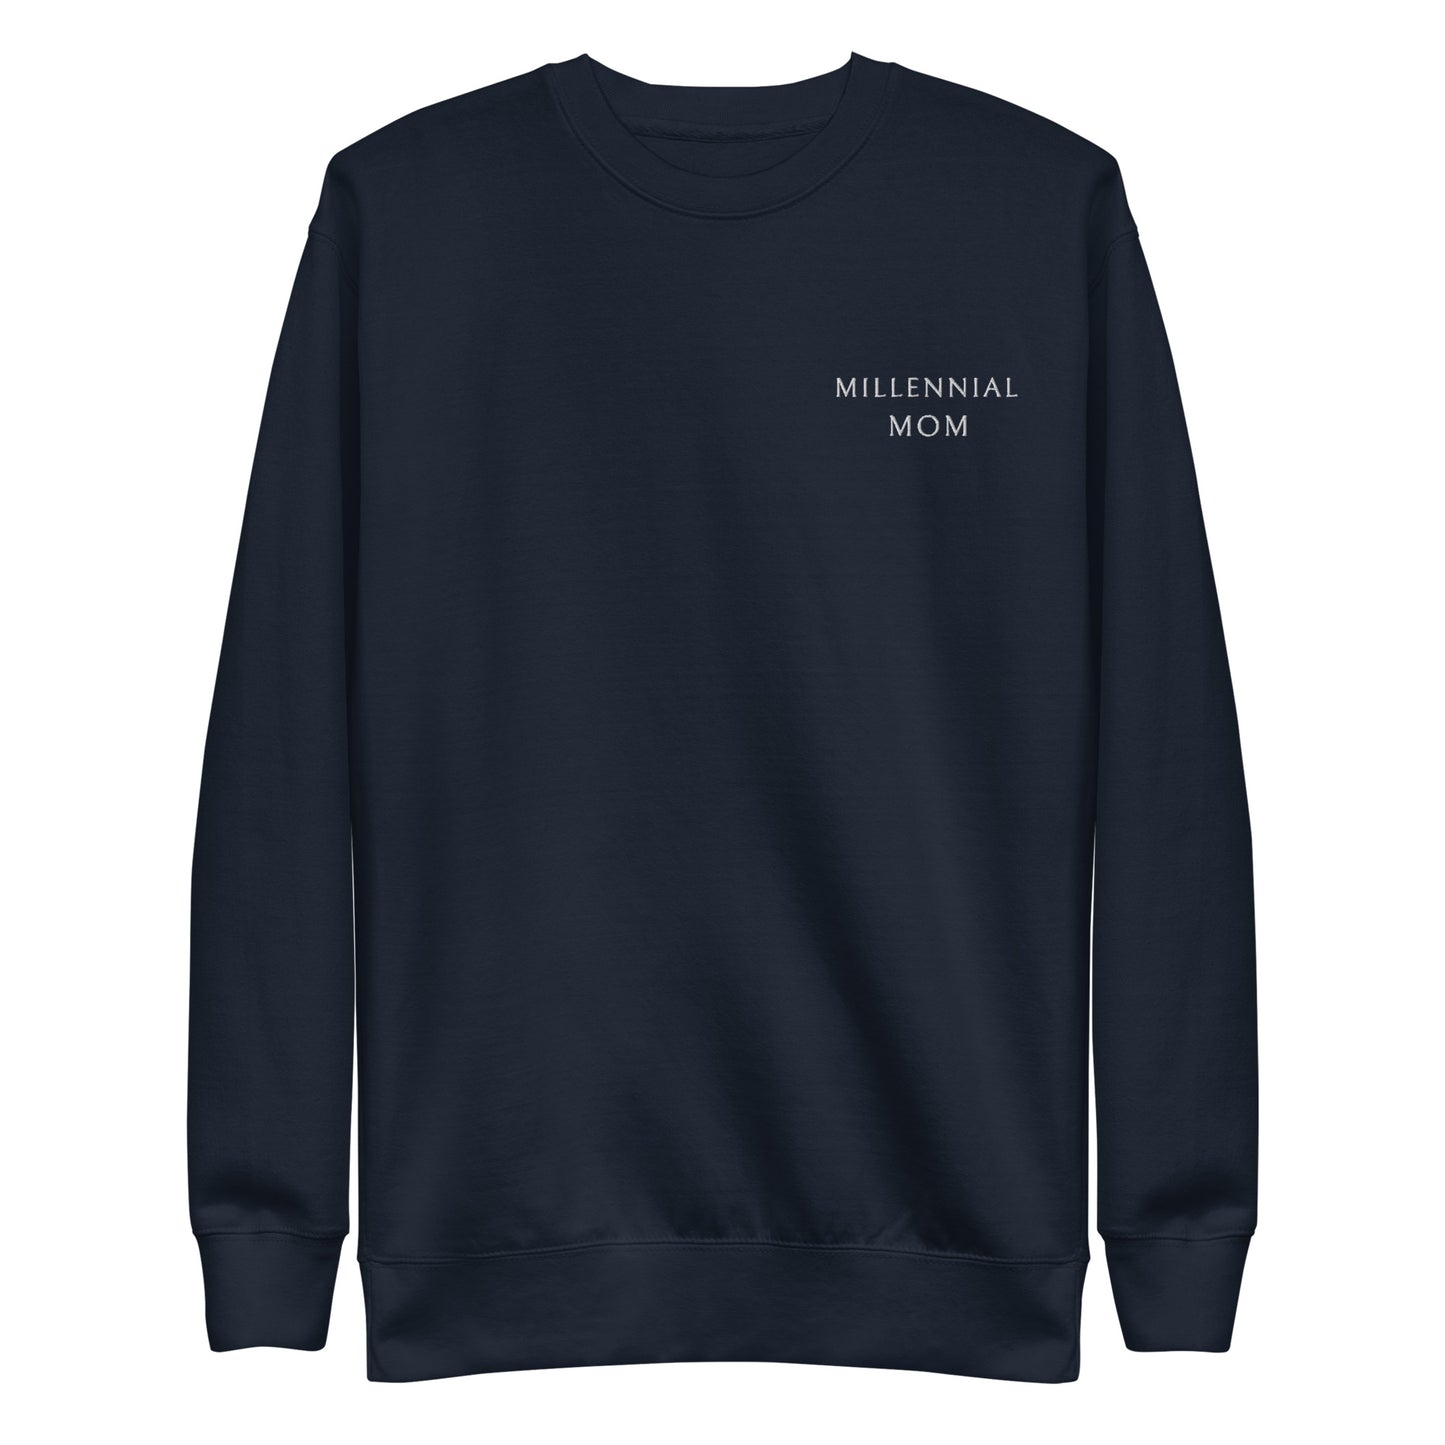 Millennial Mom Unisex Premium Sweatshirt